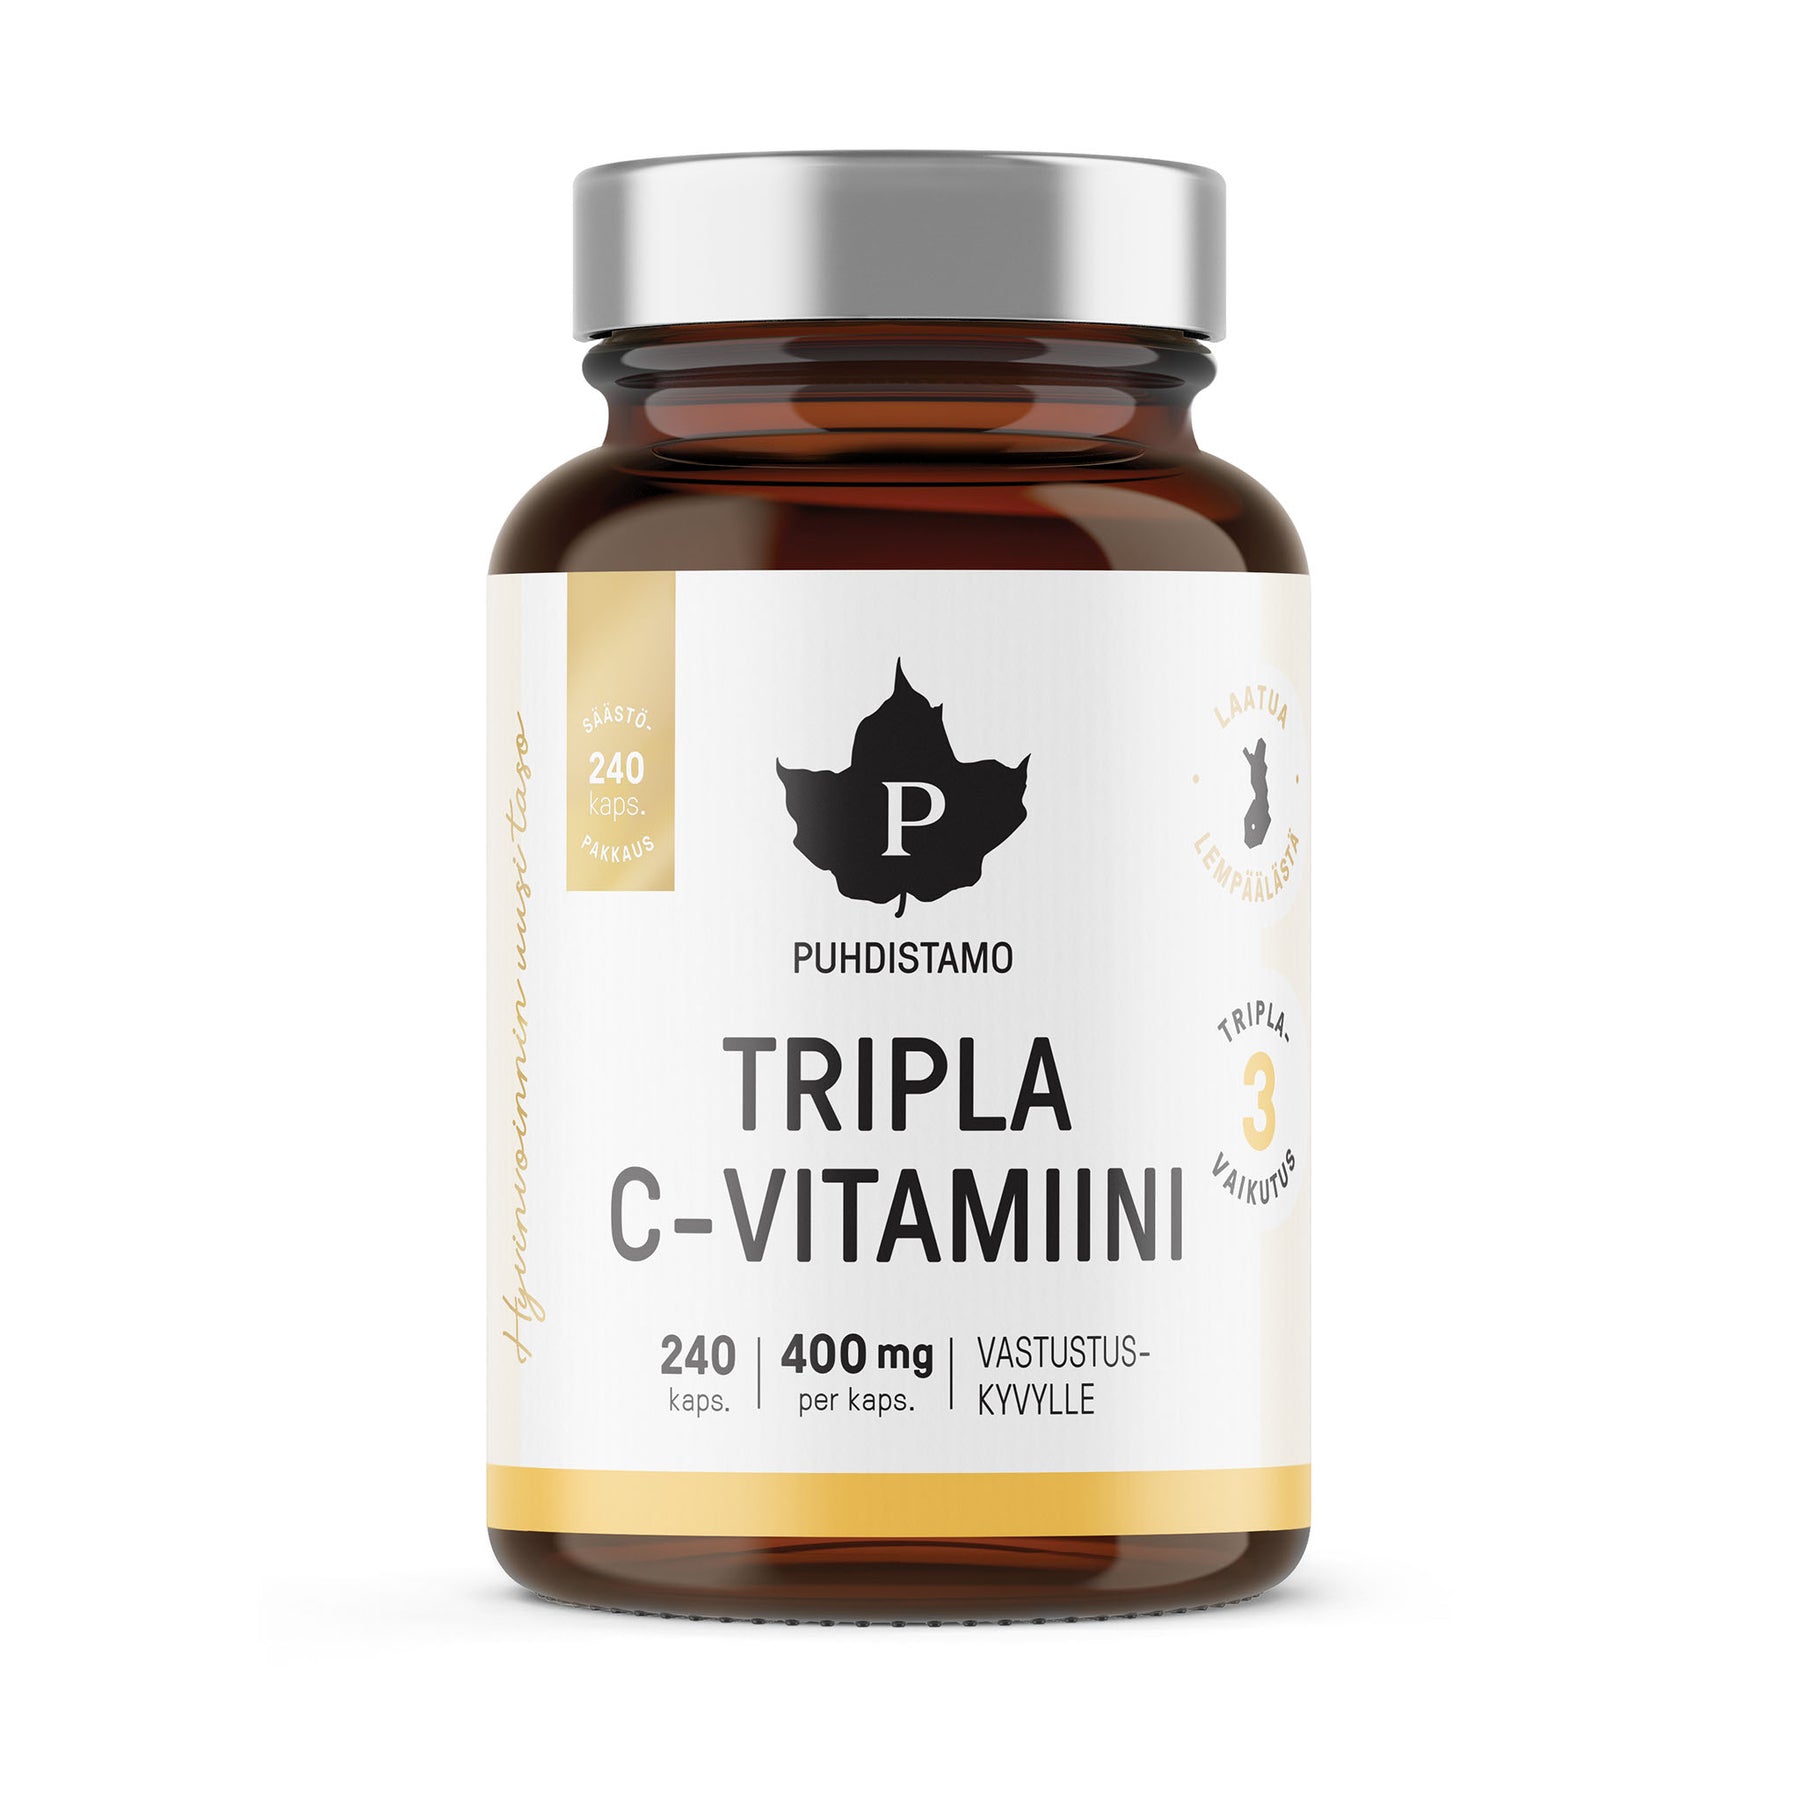 Puhdistamo Tripla C-vitamiini 400 mg 240 kaps.